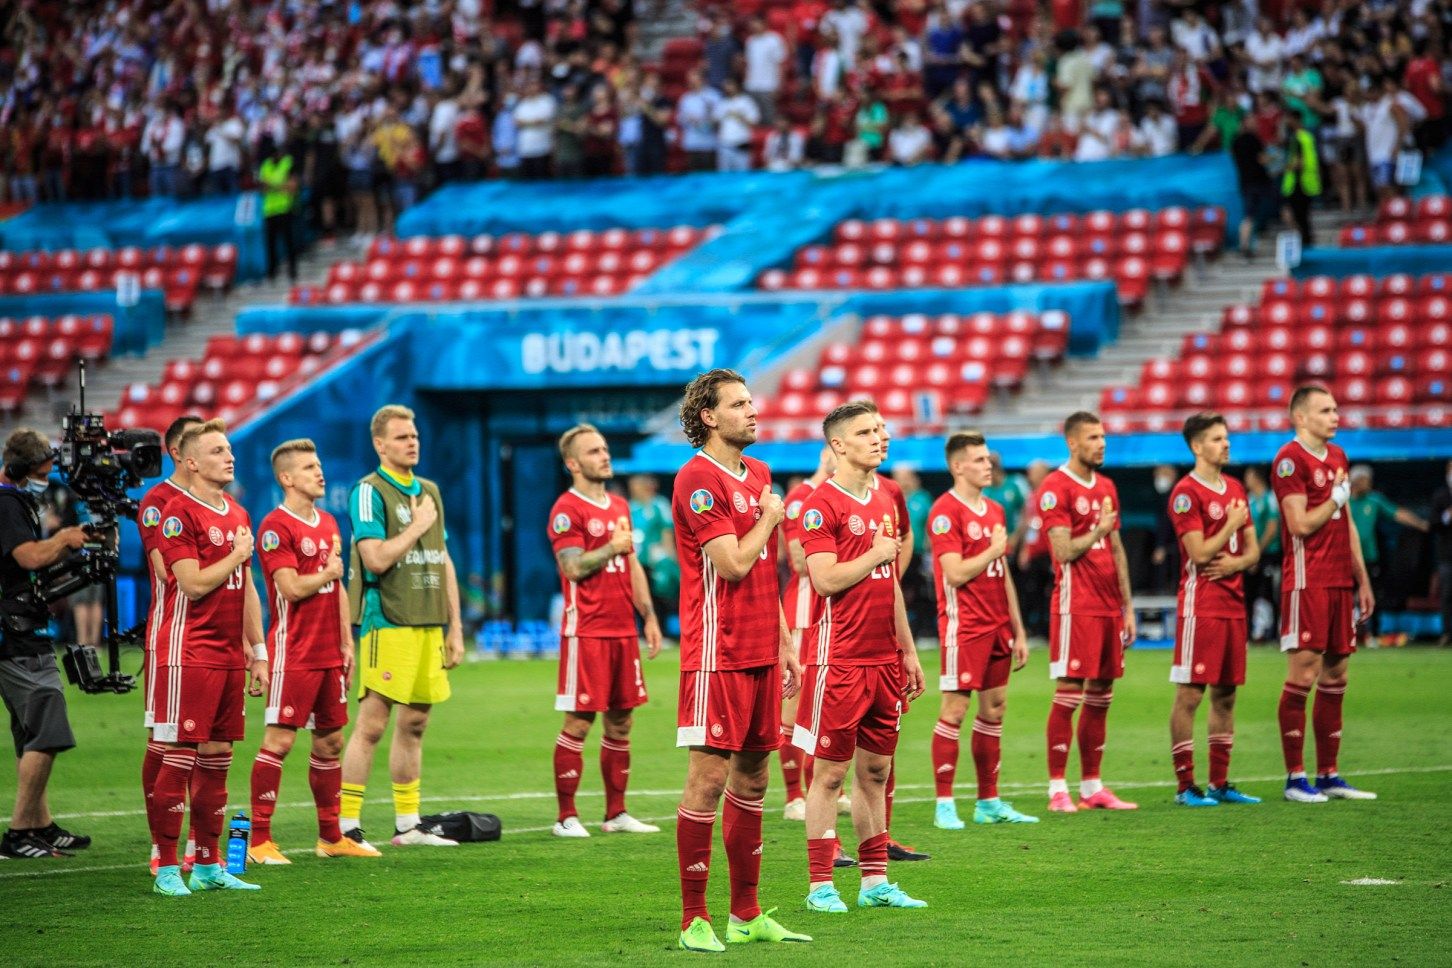 UEFA Euro 2020: the Hungarian national team at the Puskás Aréna